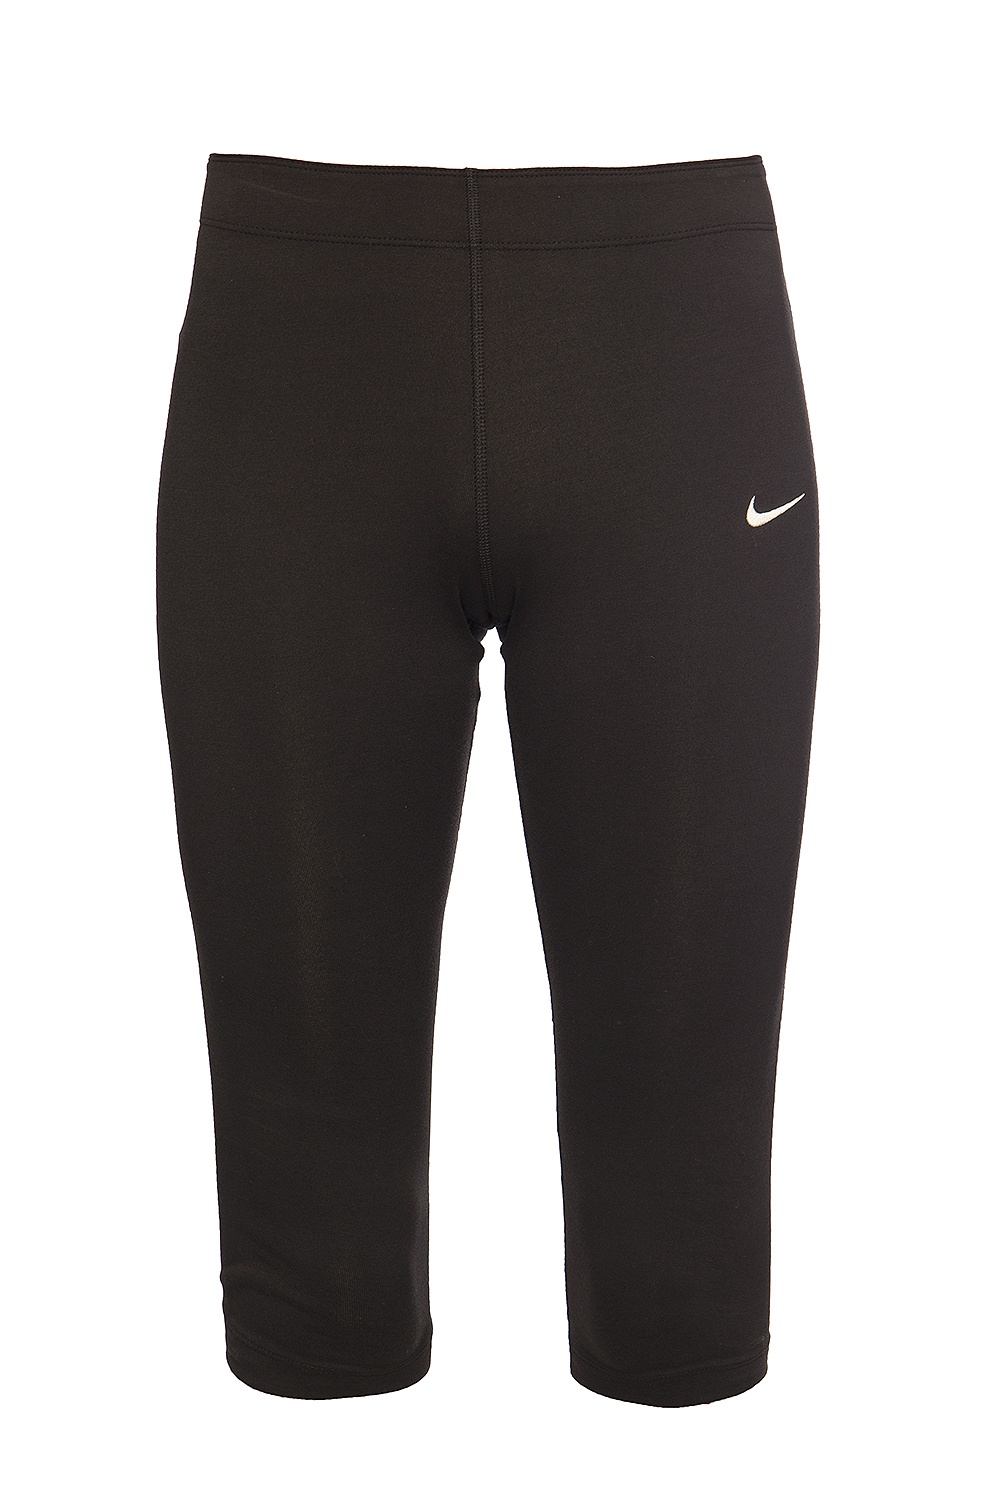 Nike Training MC Sneakers in zwart en wit, Nike Short leggings with logo, Women's Clothing